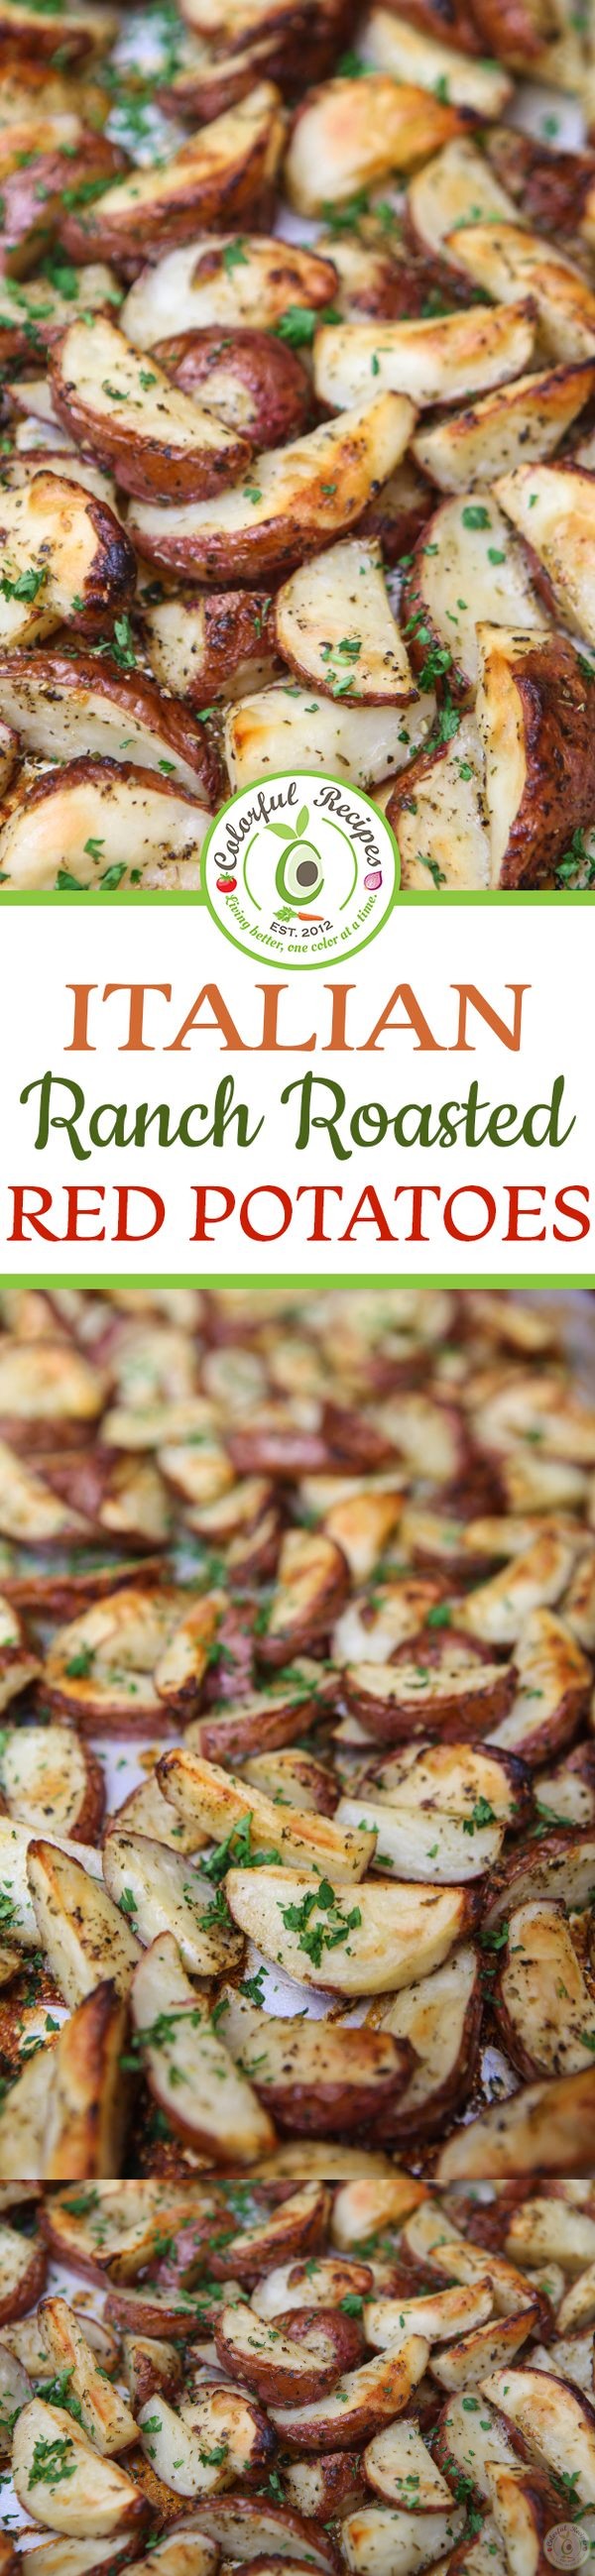 Italian Ranch Roasted Red Potatoes